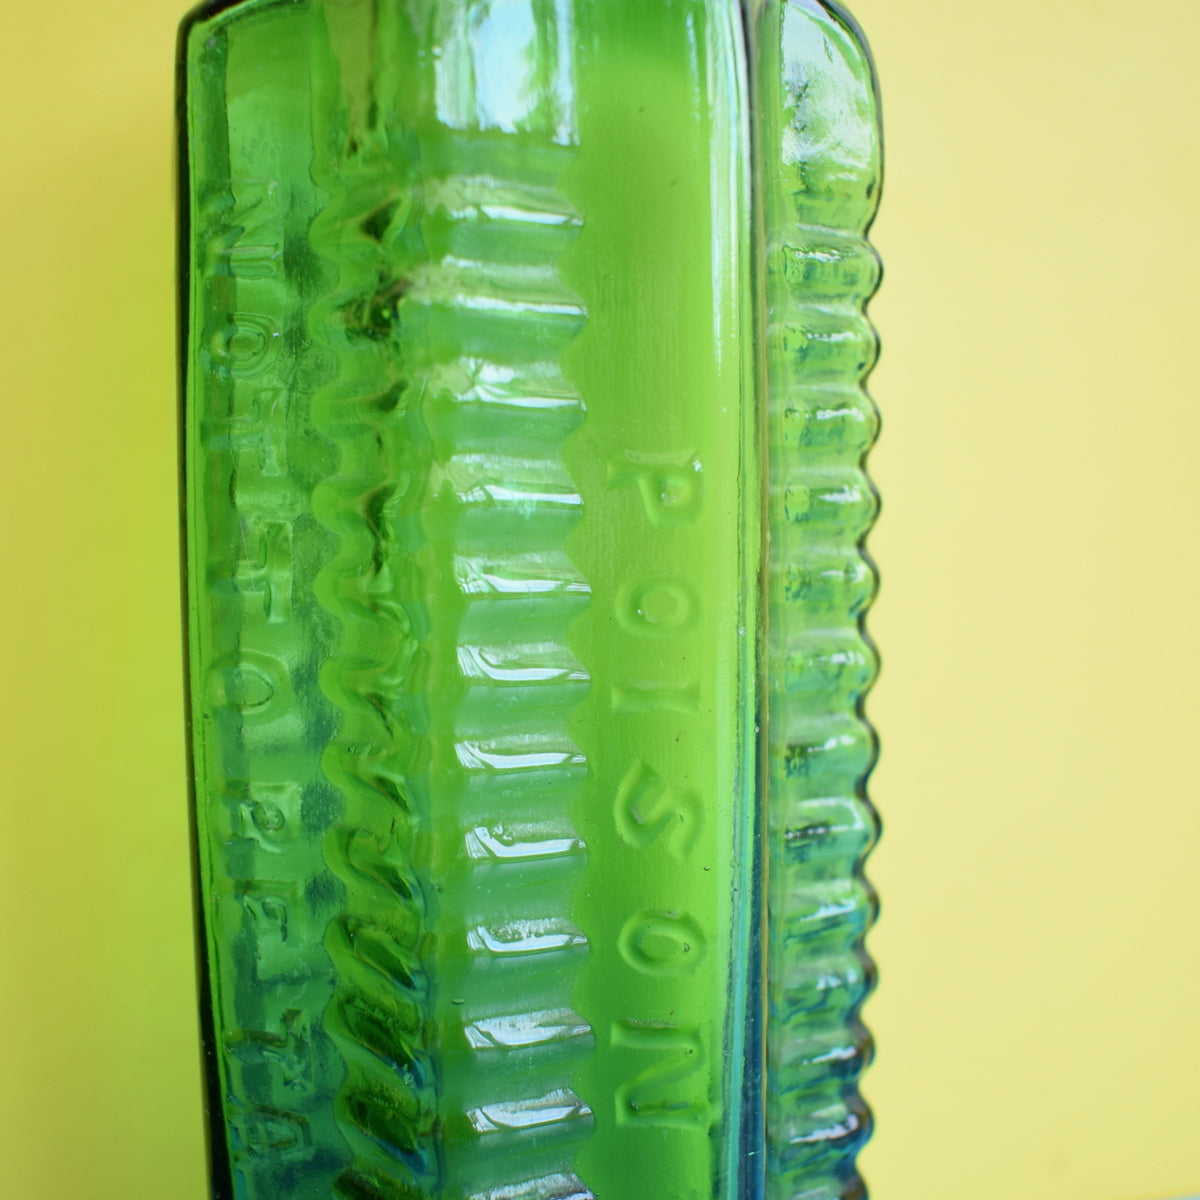 Vintage 1920s Glass Poison Bottles - Emerald Green - Great Bud Vases For Flowers